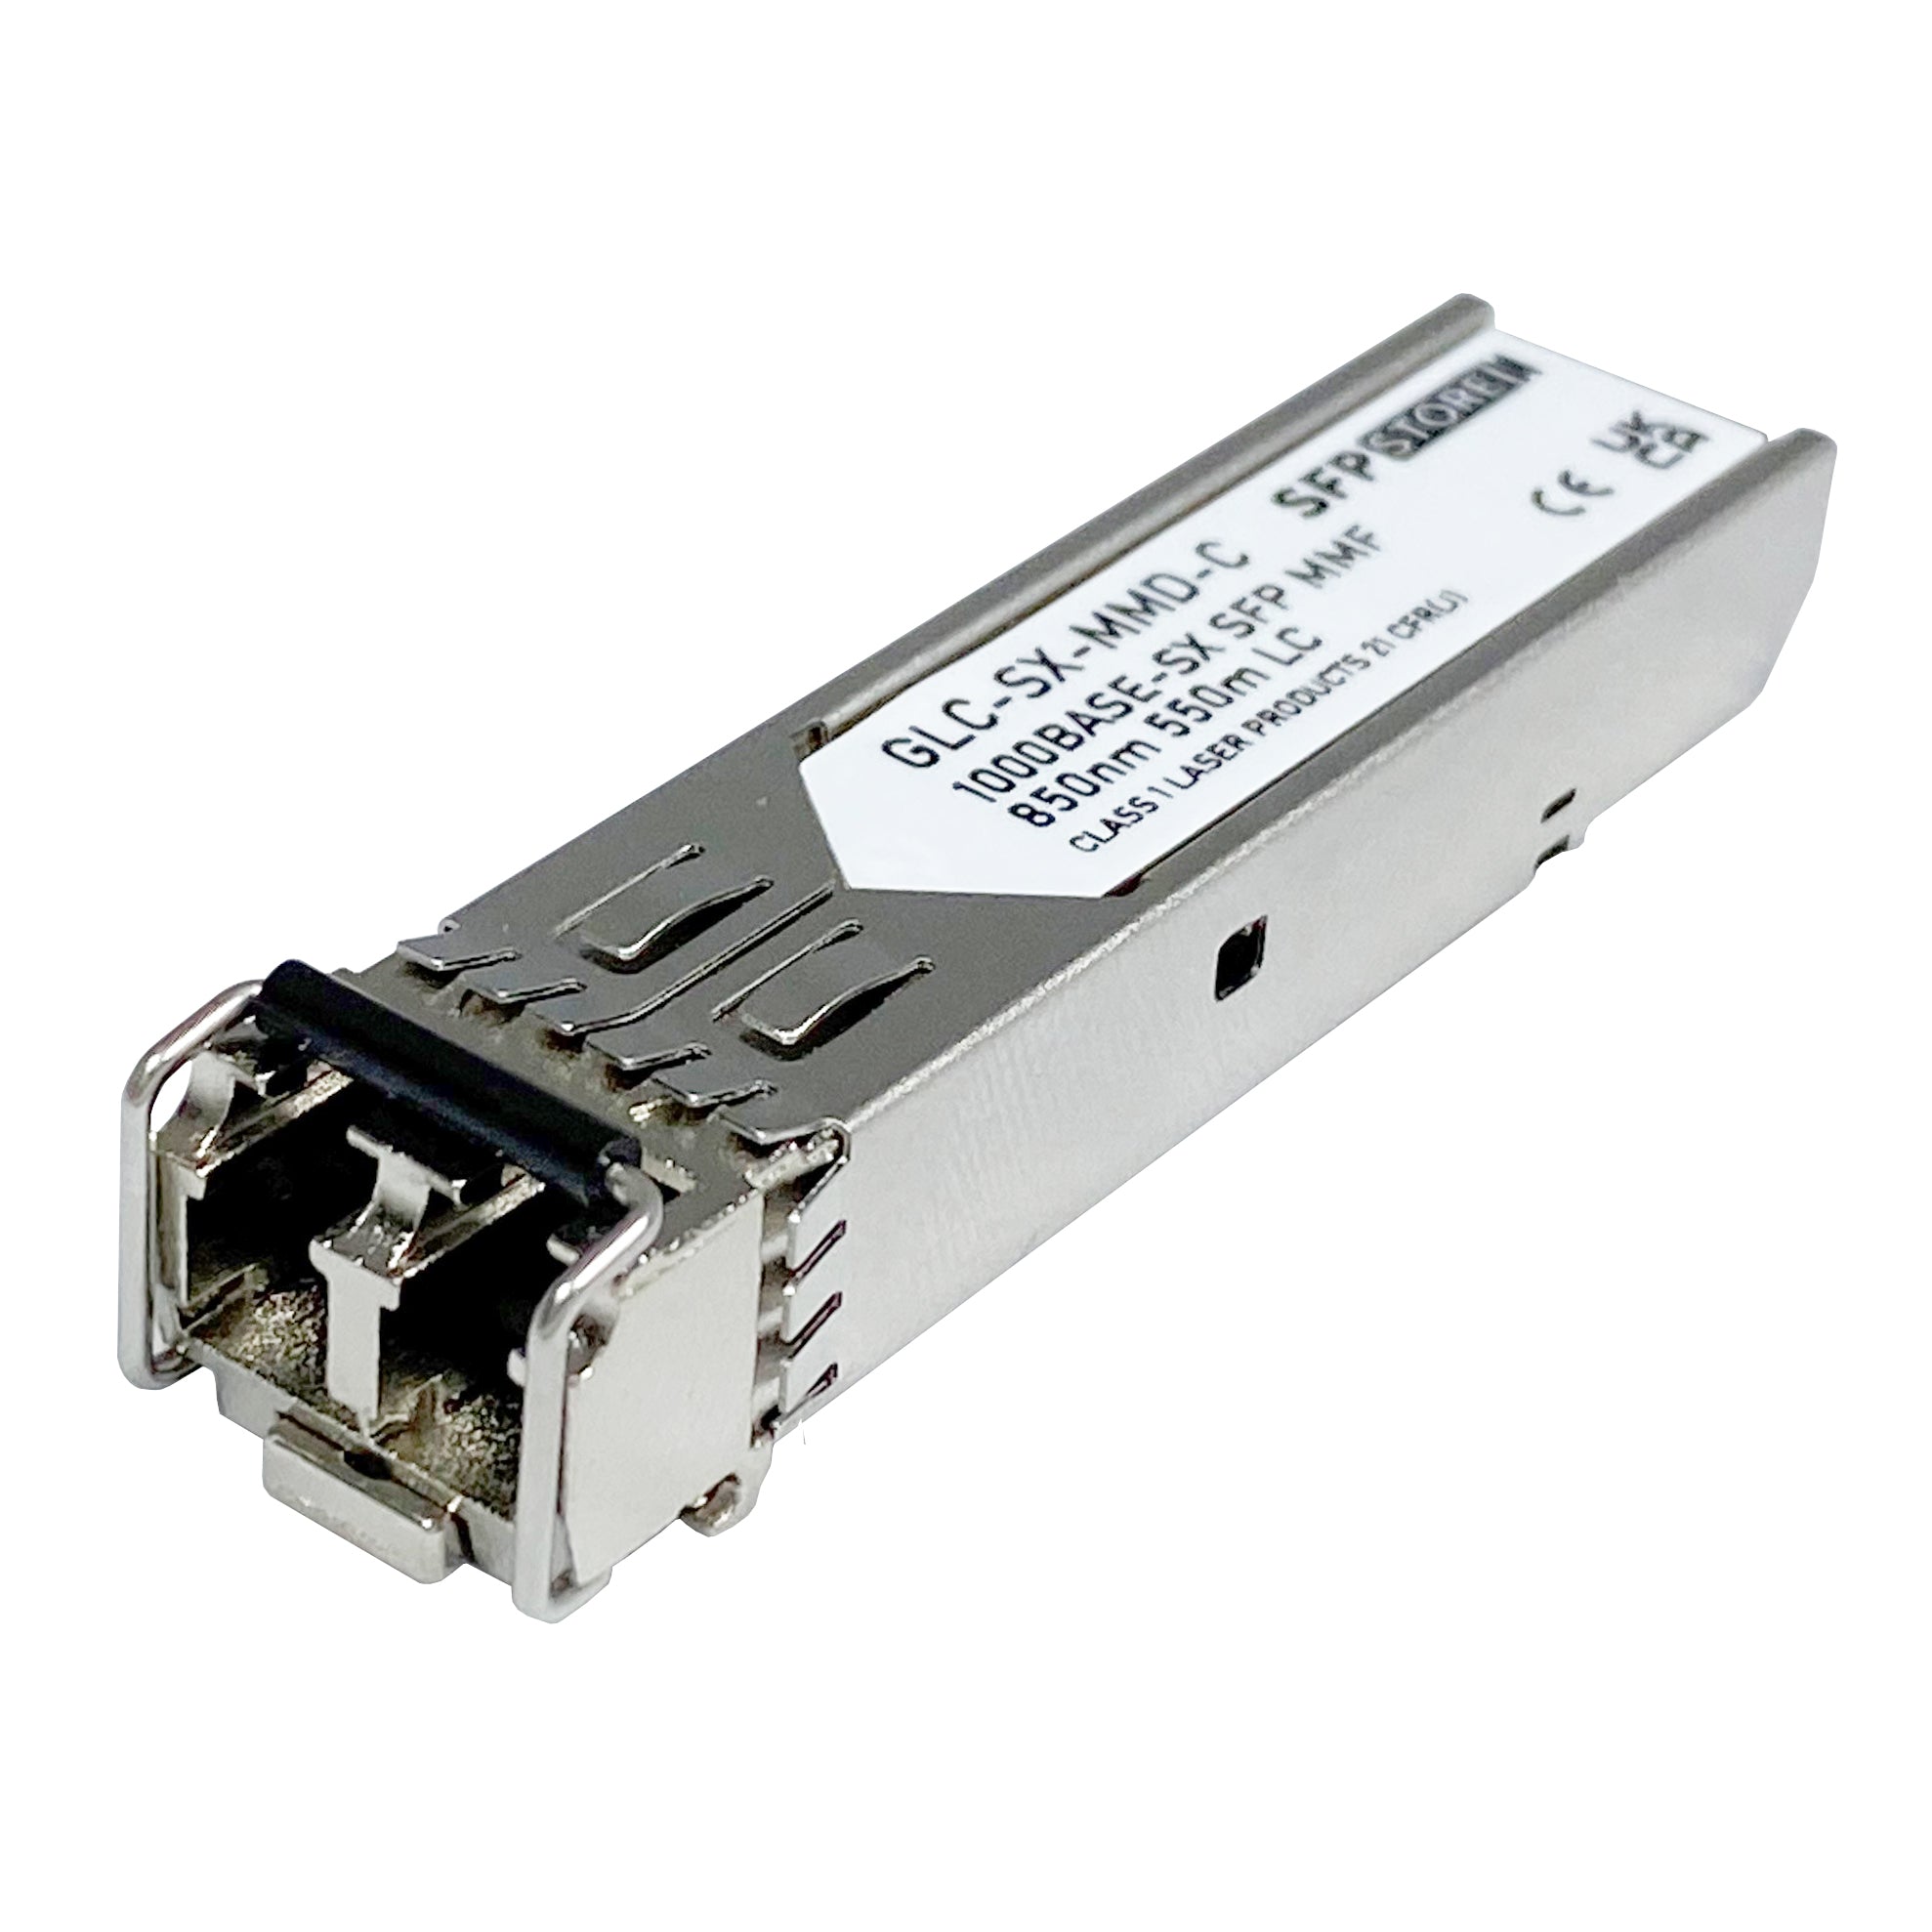 PAN-SFP-SX-C Palo Alto Compatible 1G SX SFP LC Transceiver